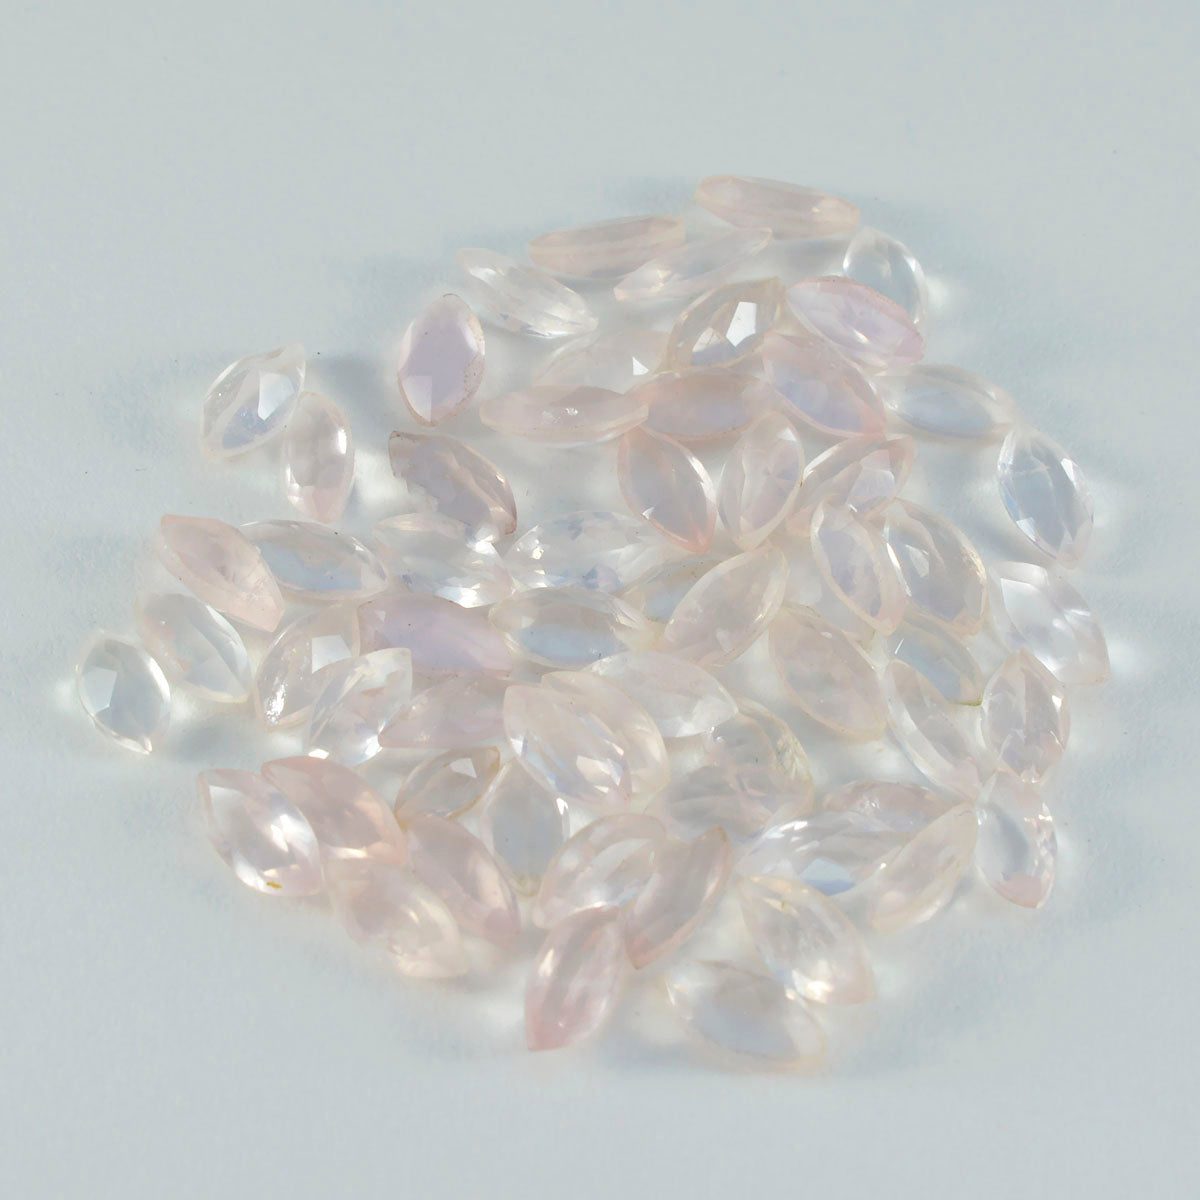 Riyogems 1PC Pink Rose Quartz Faceted 3x6 mm Marquise Shape A+1 Quality Loose Stone